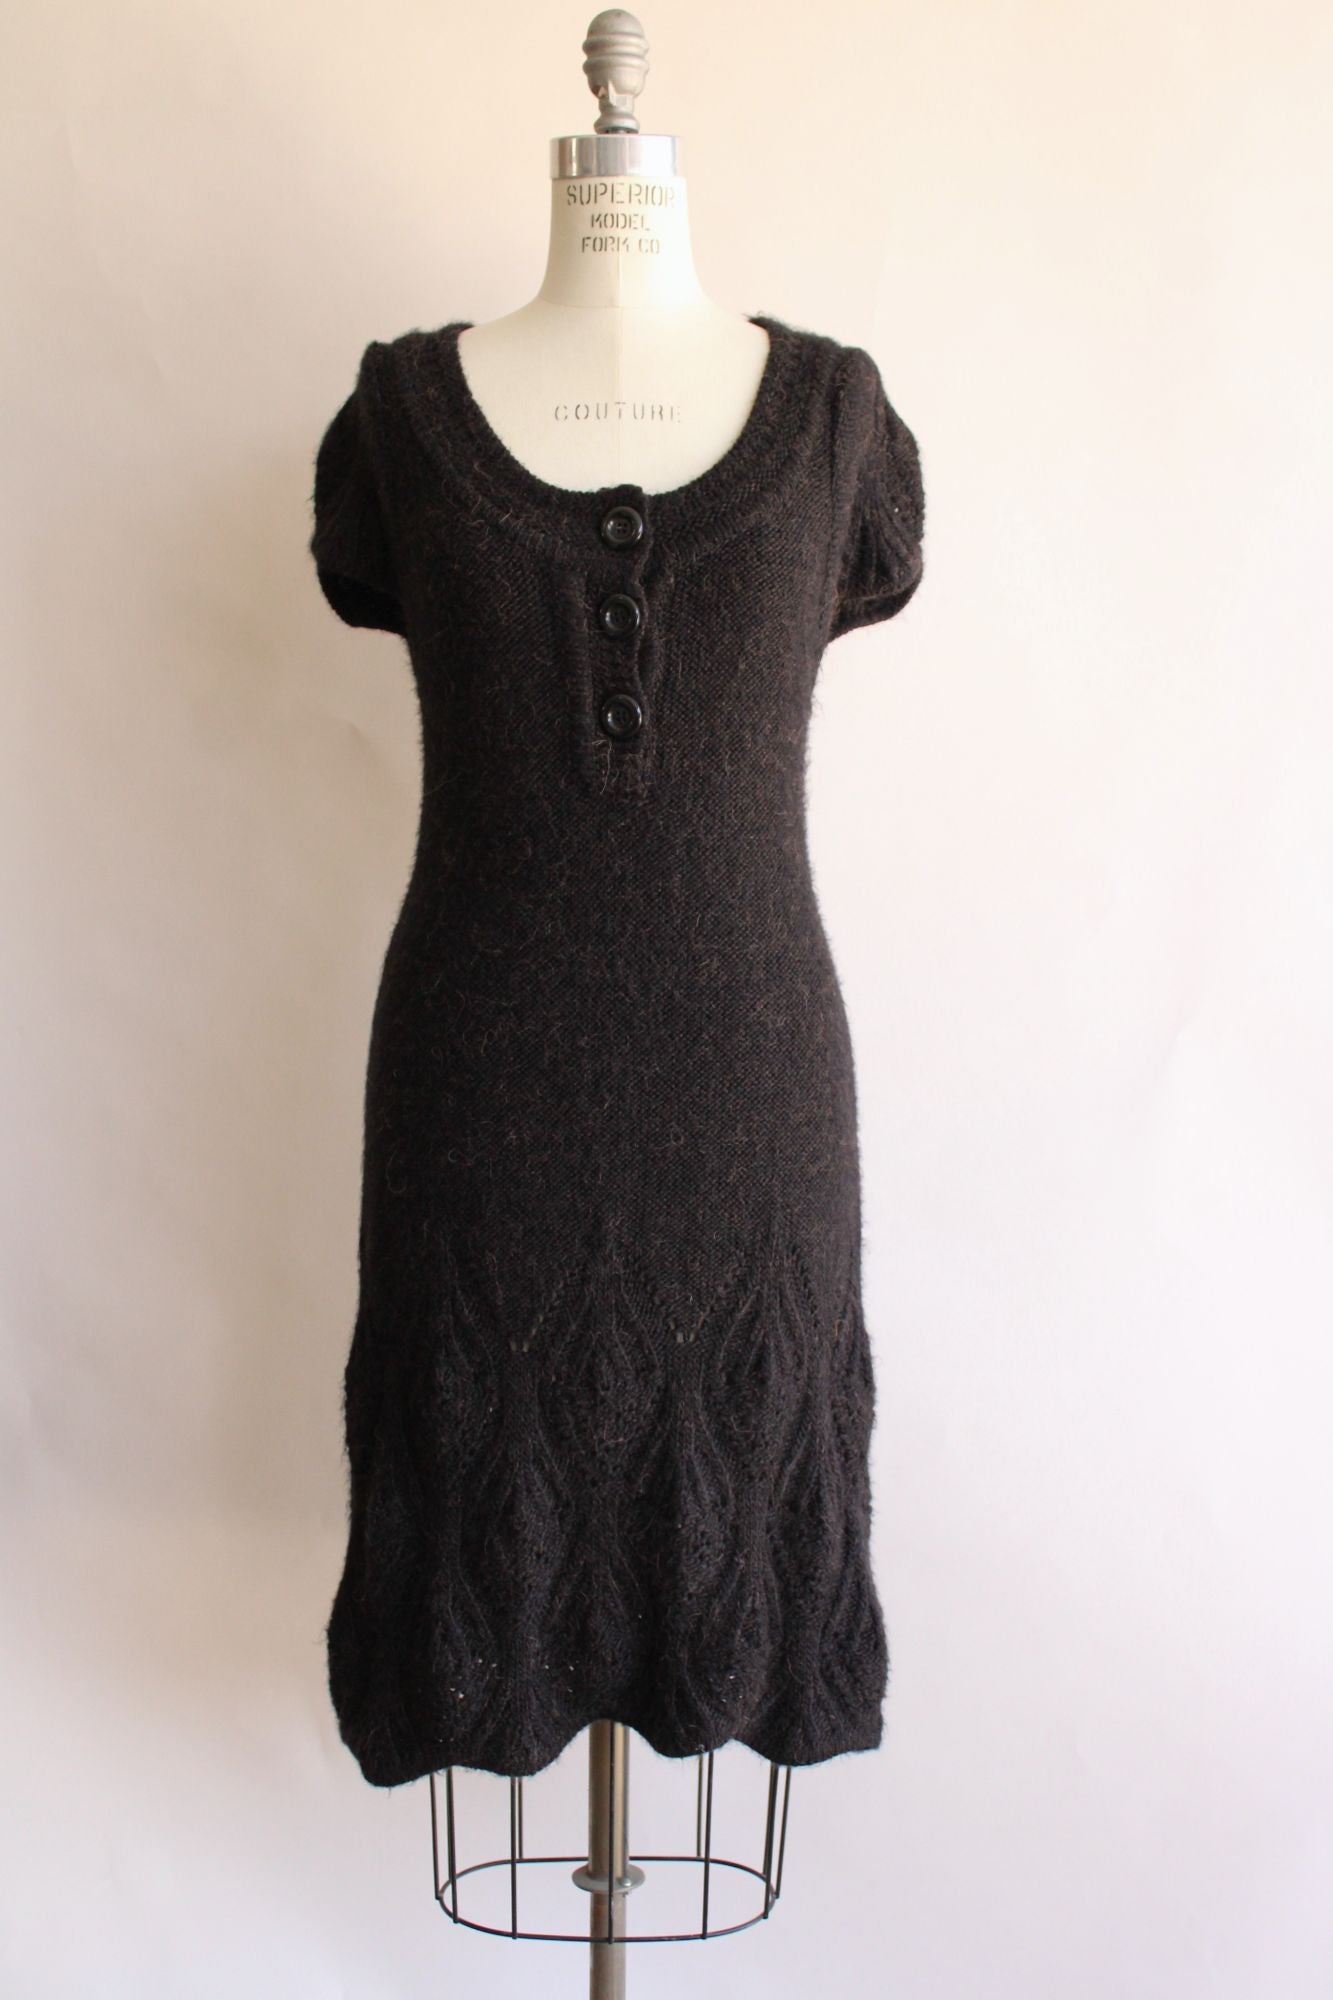 Vertigo Paris dress, black sweater dress, size L